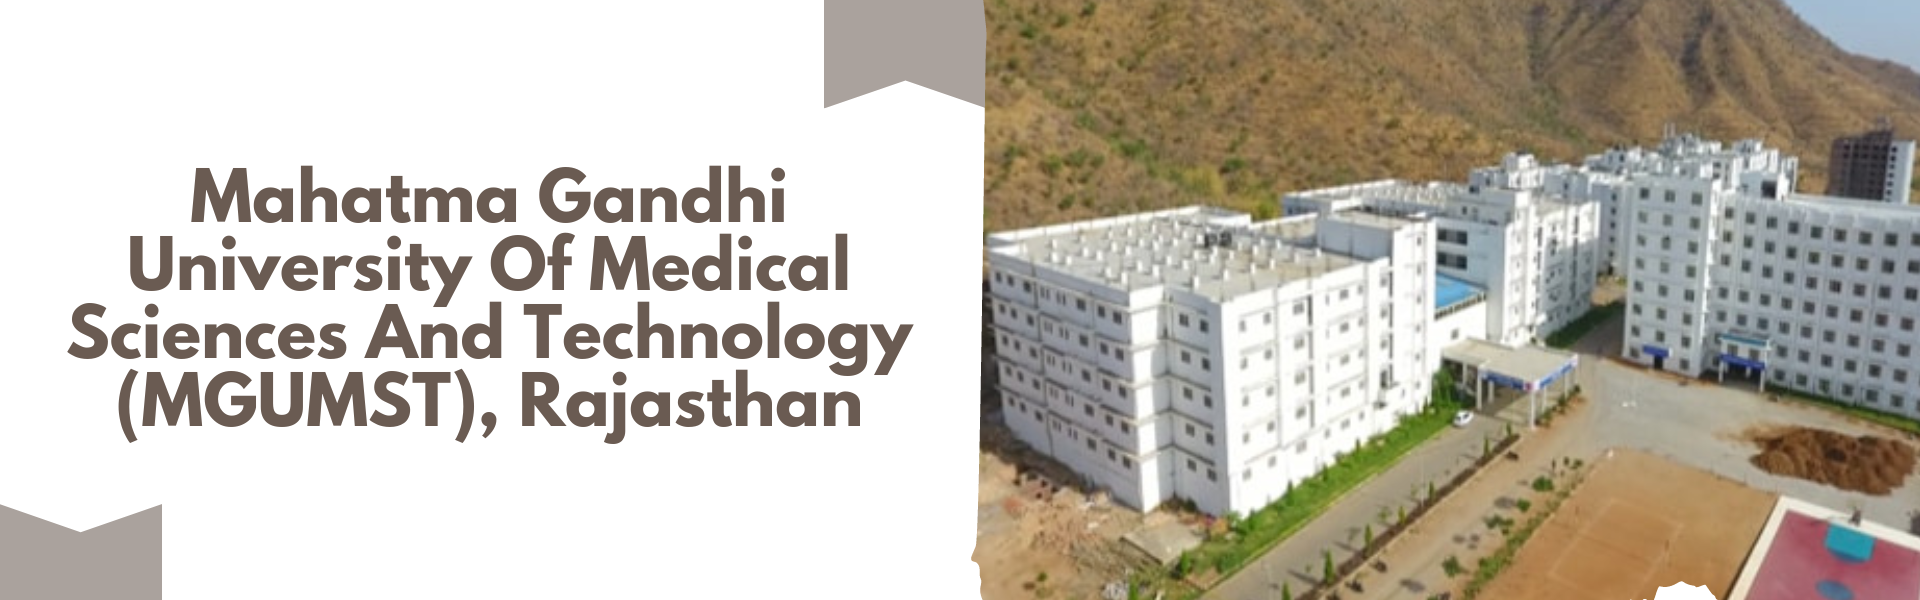 Mahatma Gandhi University Of Medical Sciences And Technology (MGUMST), Rajasthan